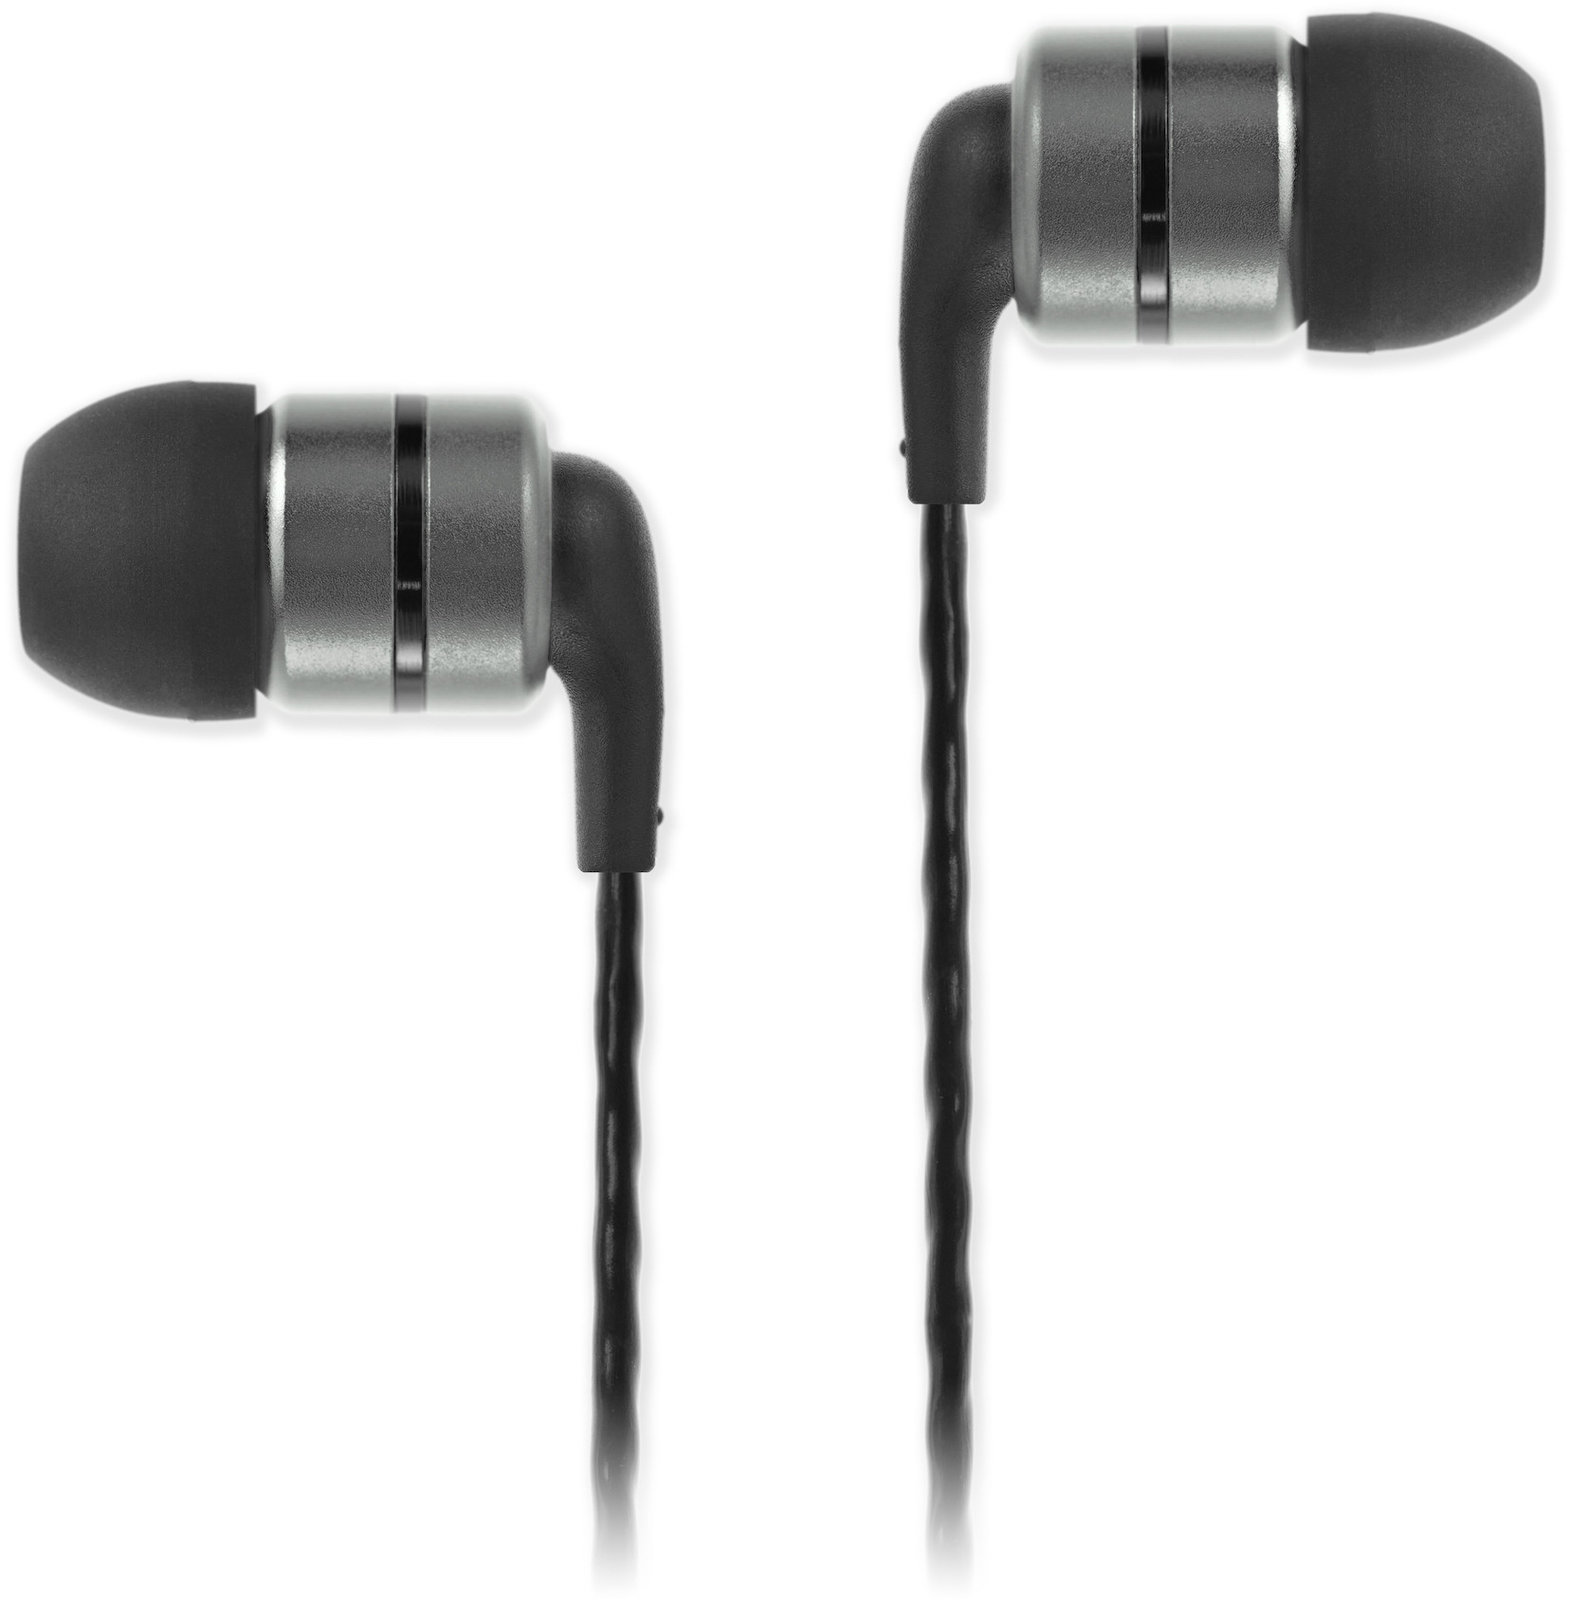 In-Ear Headphones SoundMAGIC E80 Black-Gun